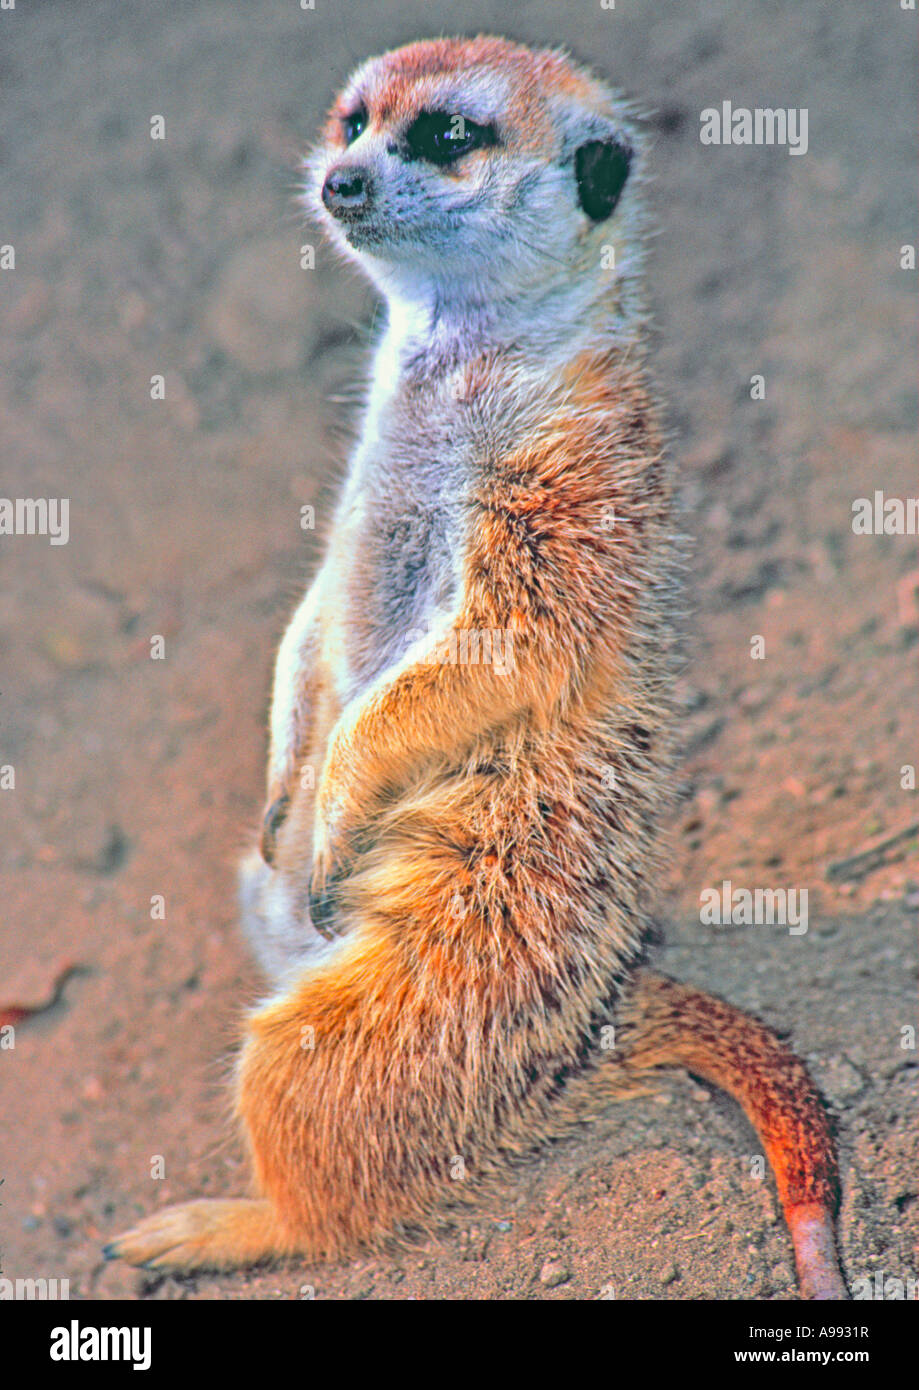 The meerkat or suricate, Suricata suricatta, is a small mammal belonging to the mongoose family Stock Photo